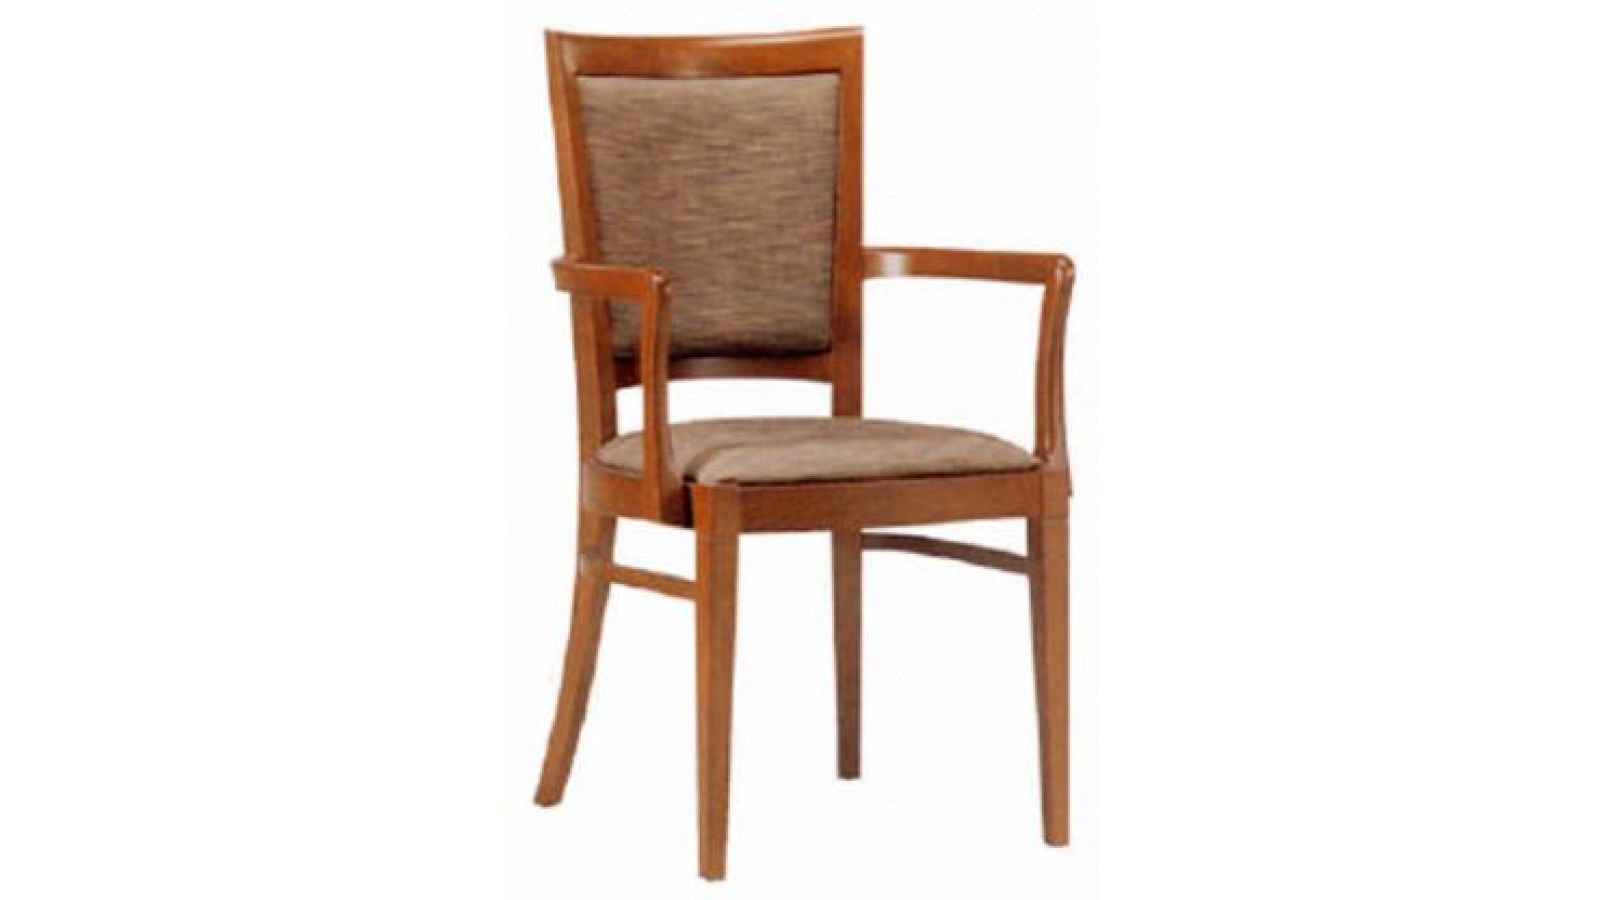 Senior Living Chairs